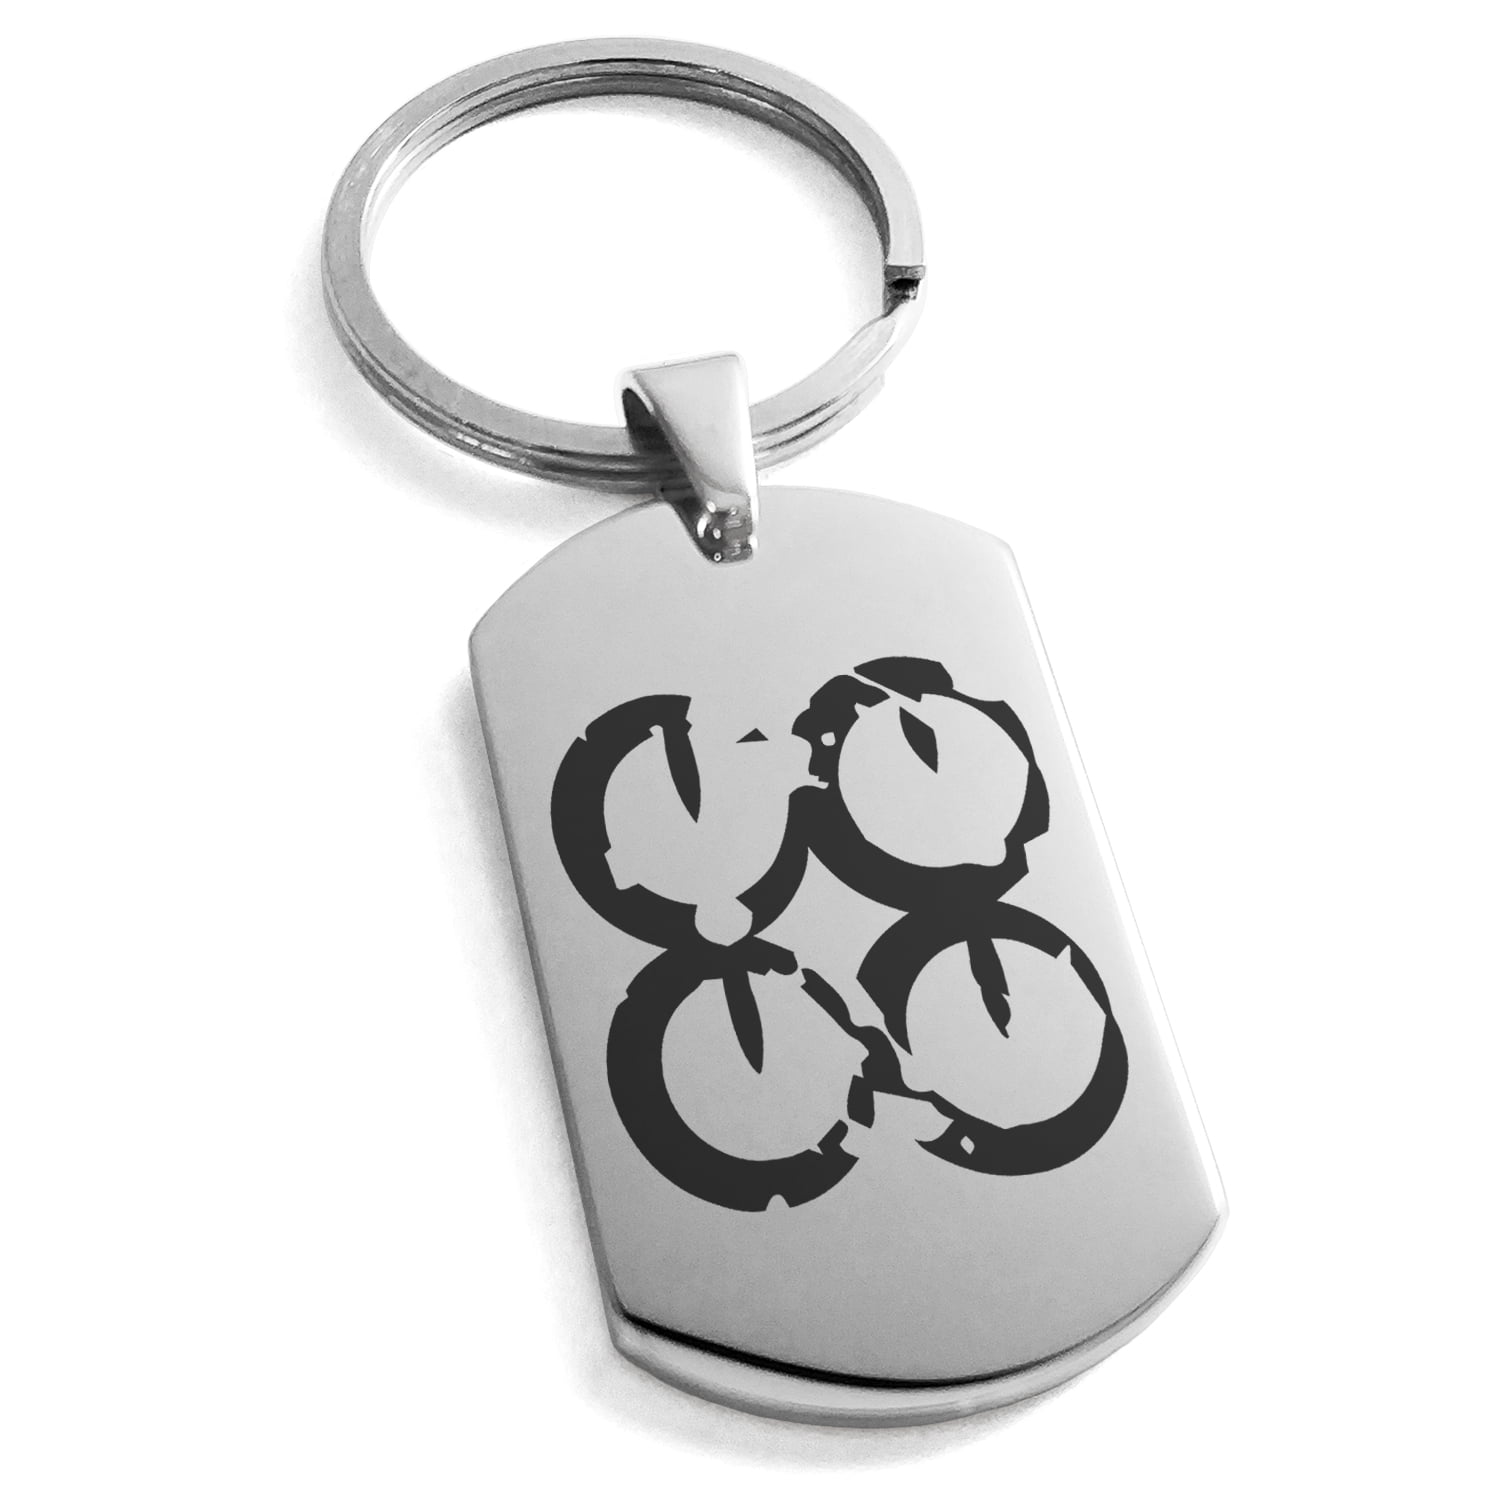 YSY 1 PCS Keychain Car Key Chain Heavy Duty Key Fob Keychain